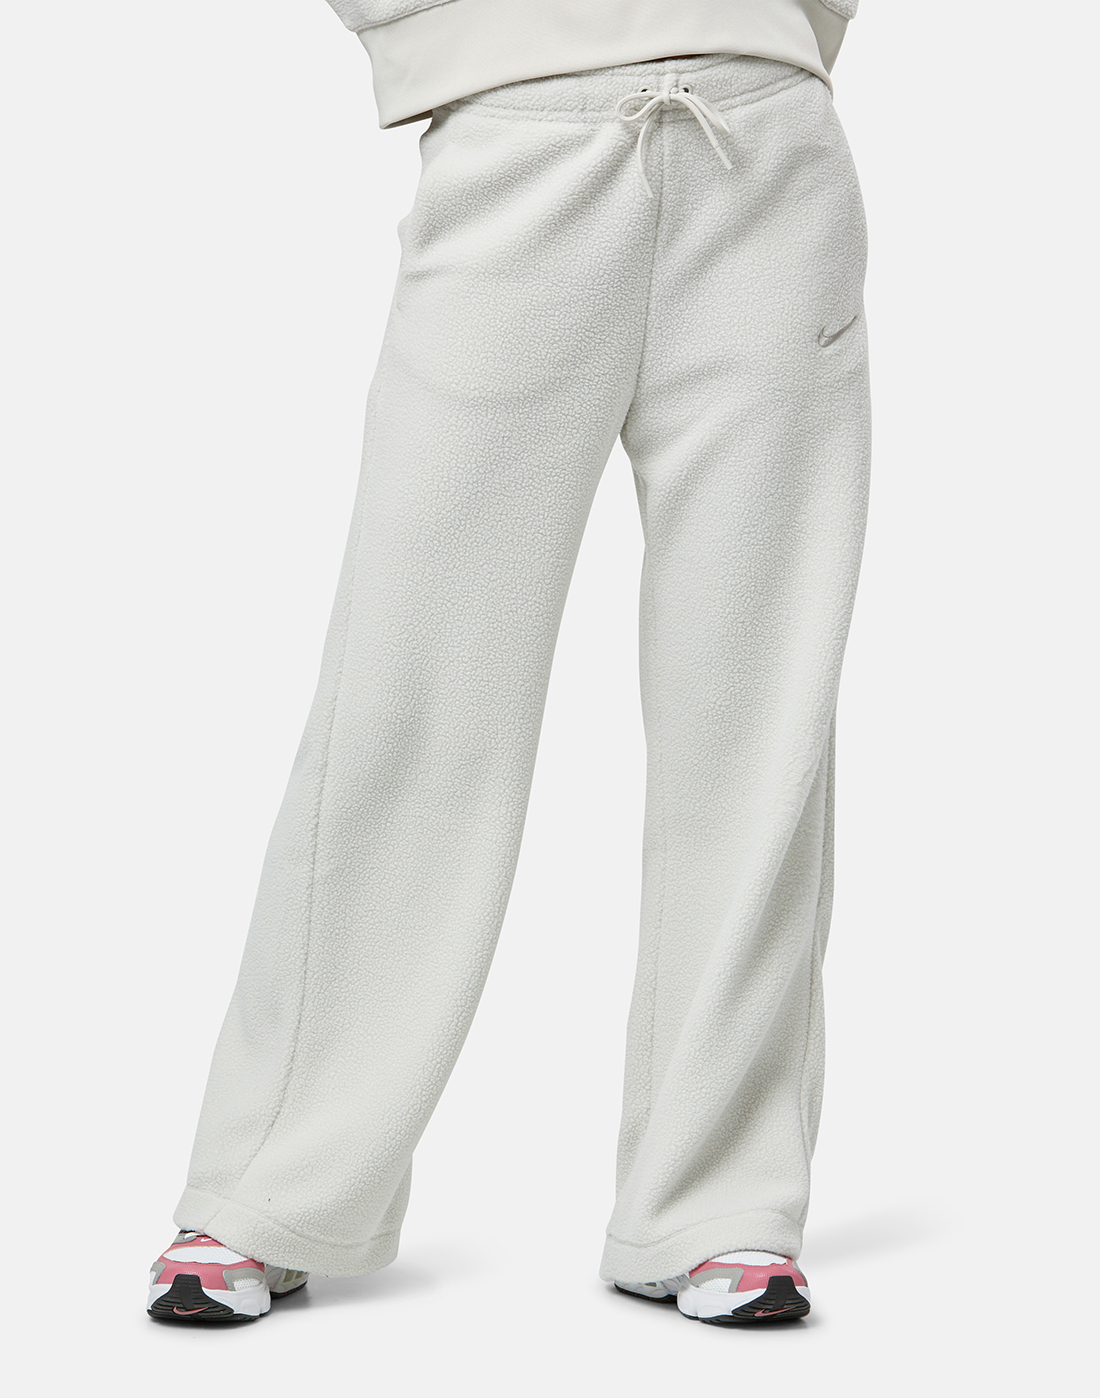 Nike Womens Plush Pants - White | Life Style Sports IE